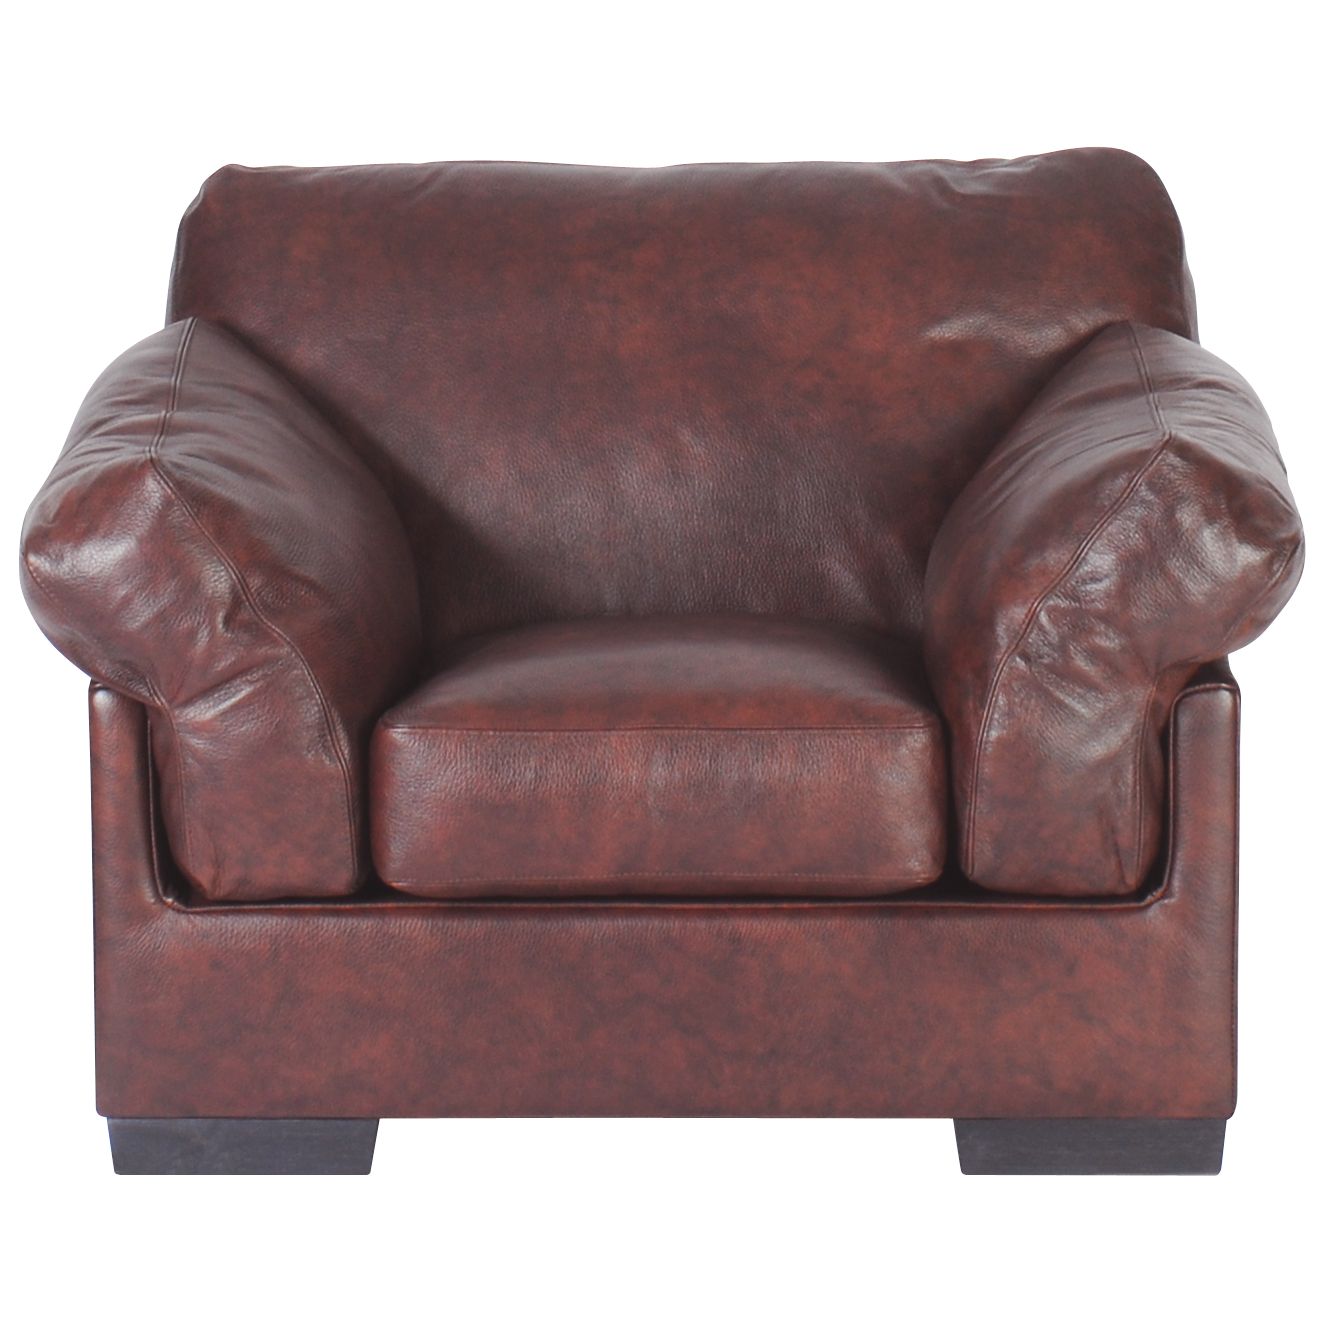 John Lewis Calanda Leather Chair, Chocolate at JohnLewis